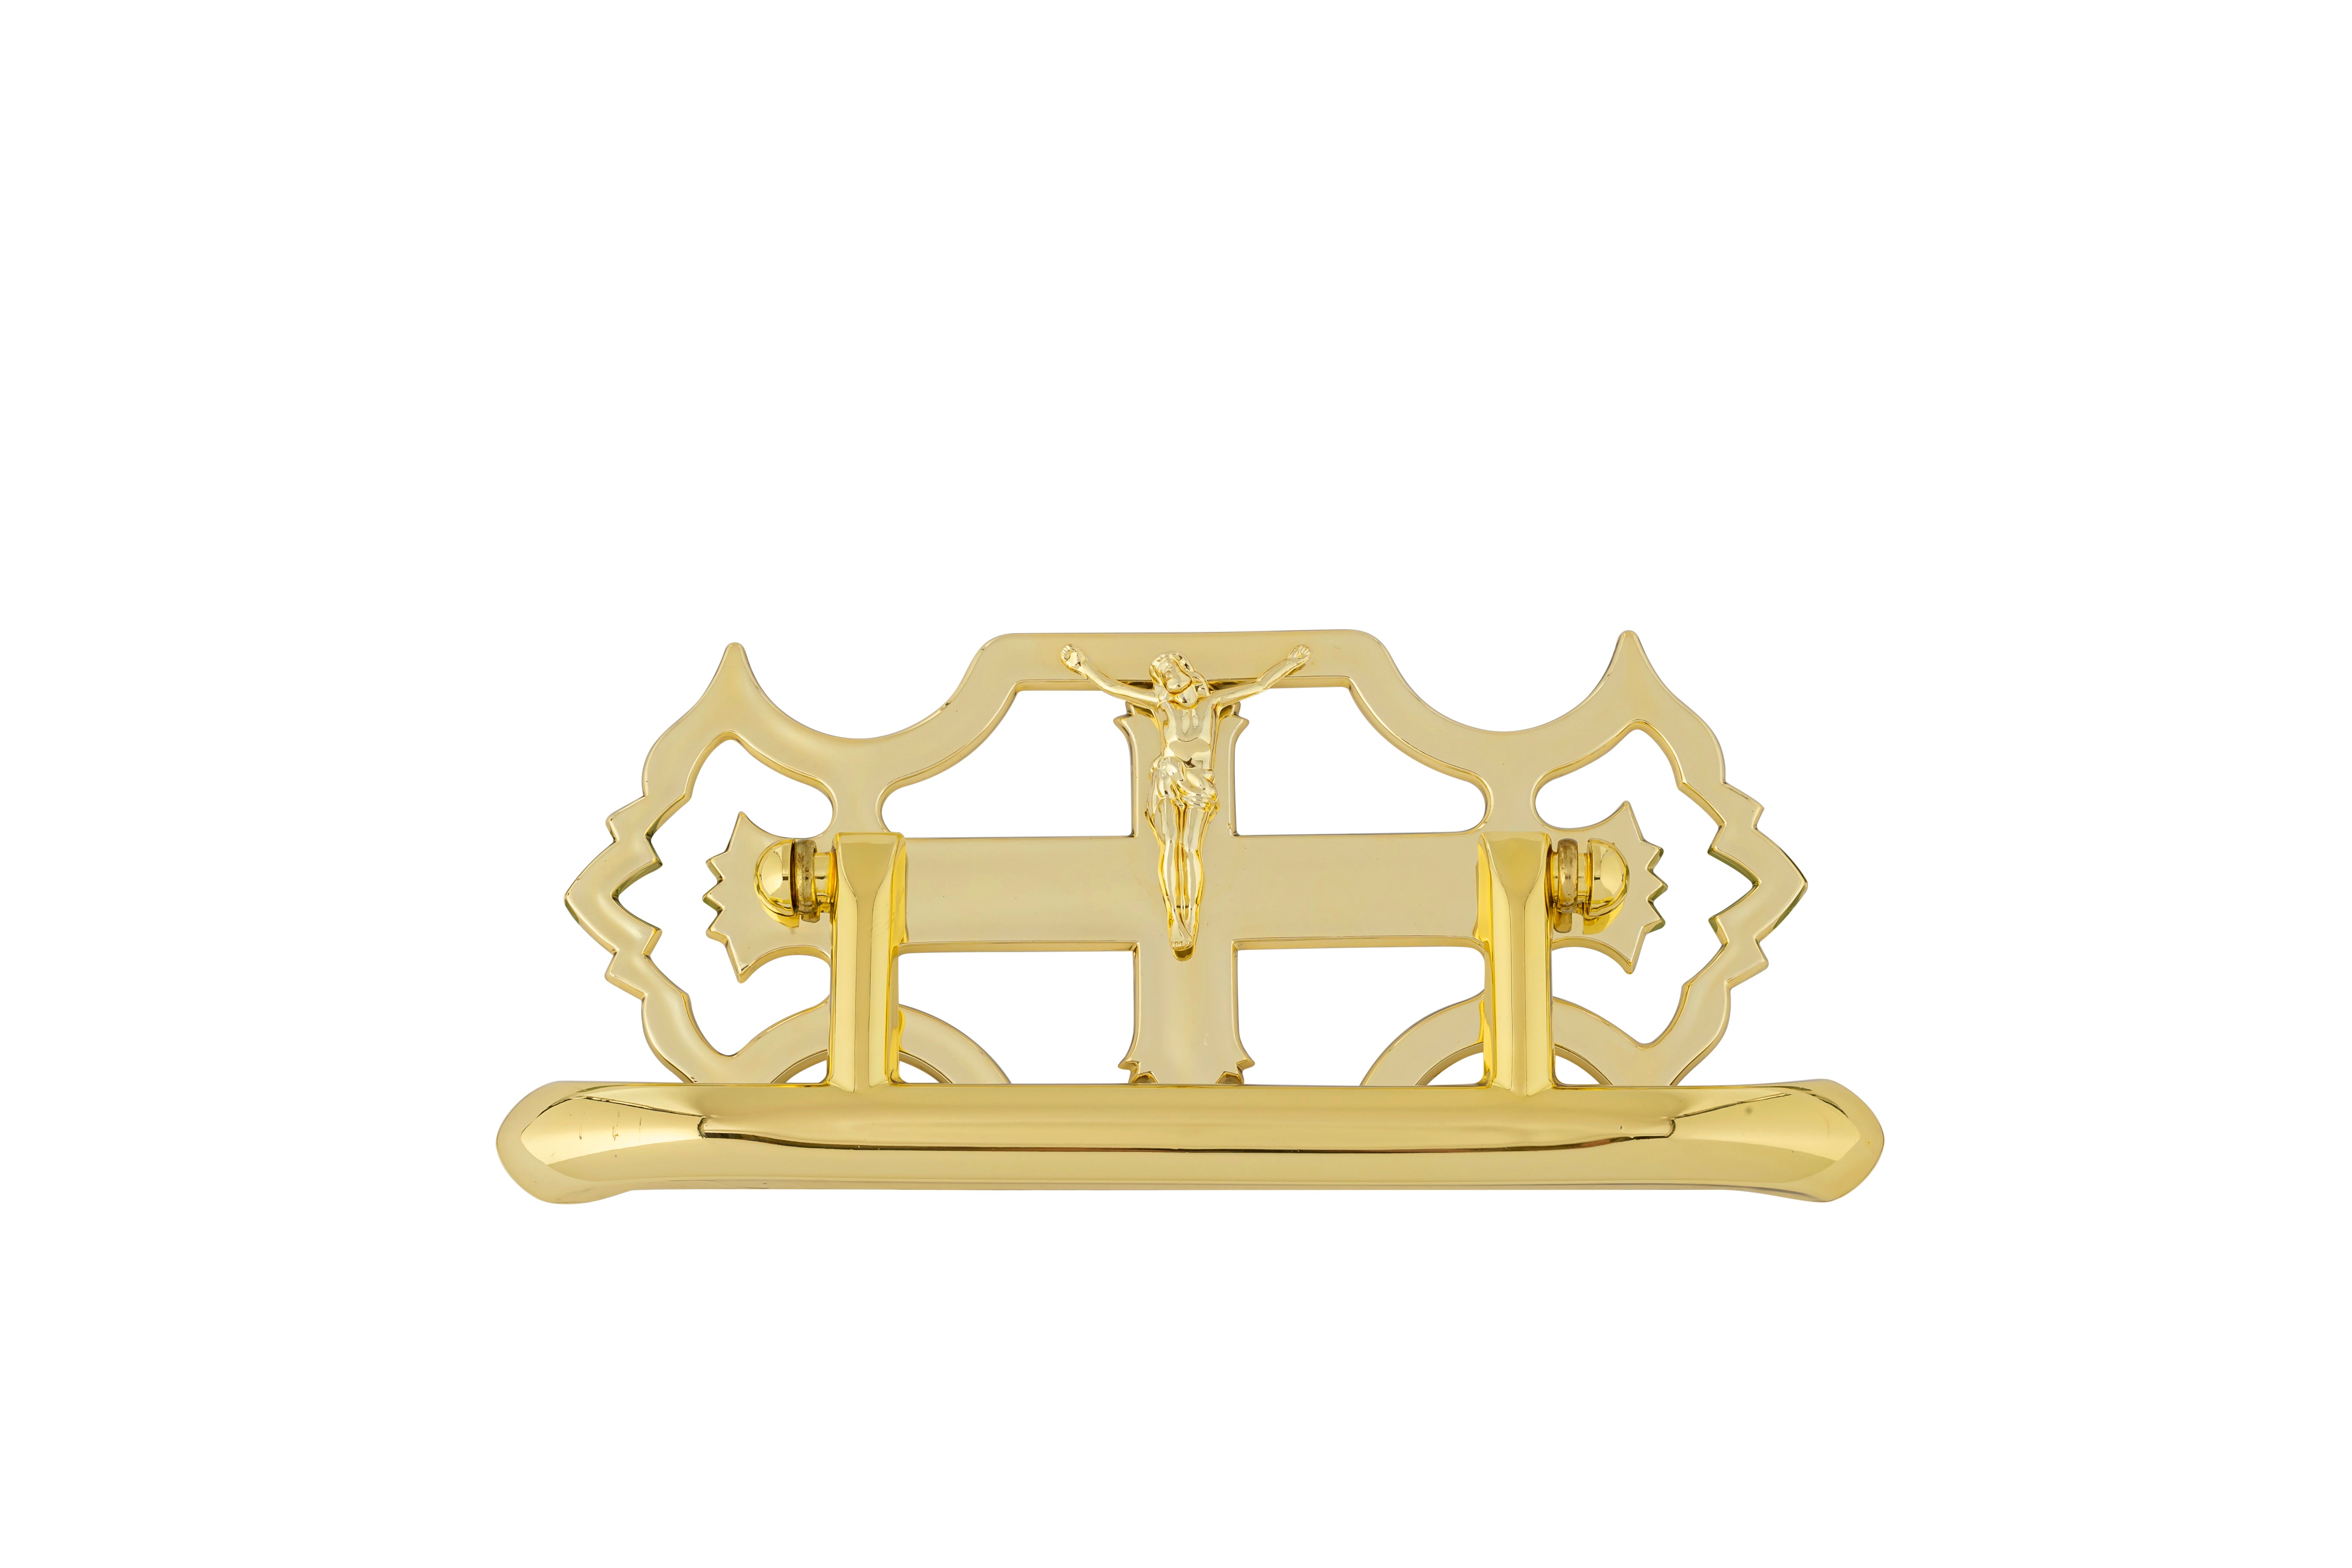 Split Plastic Cross with Figure Round Plastic Handle Gold - 6 piece set